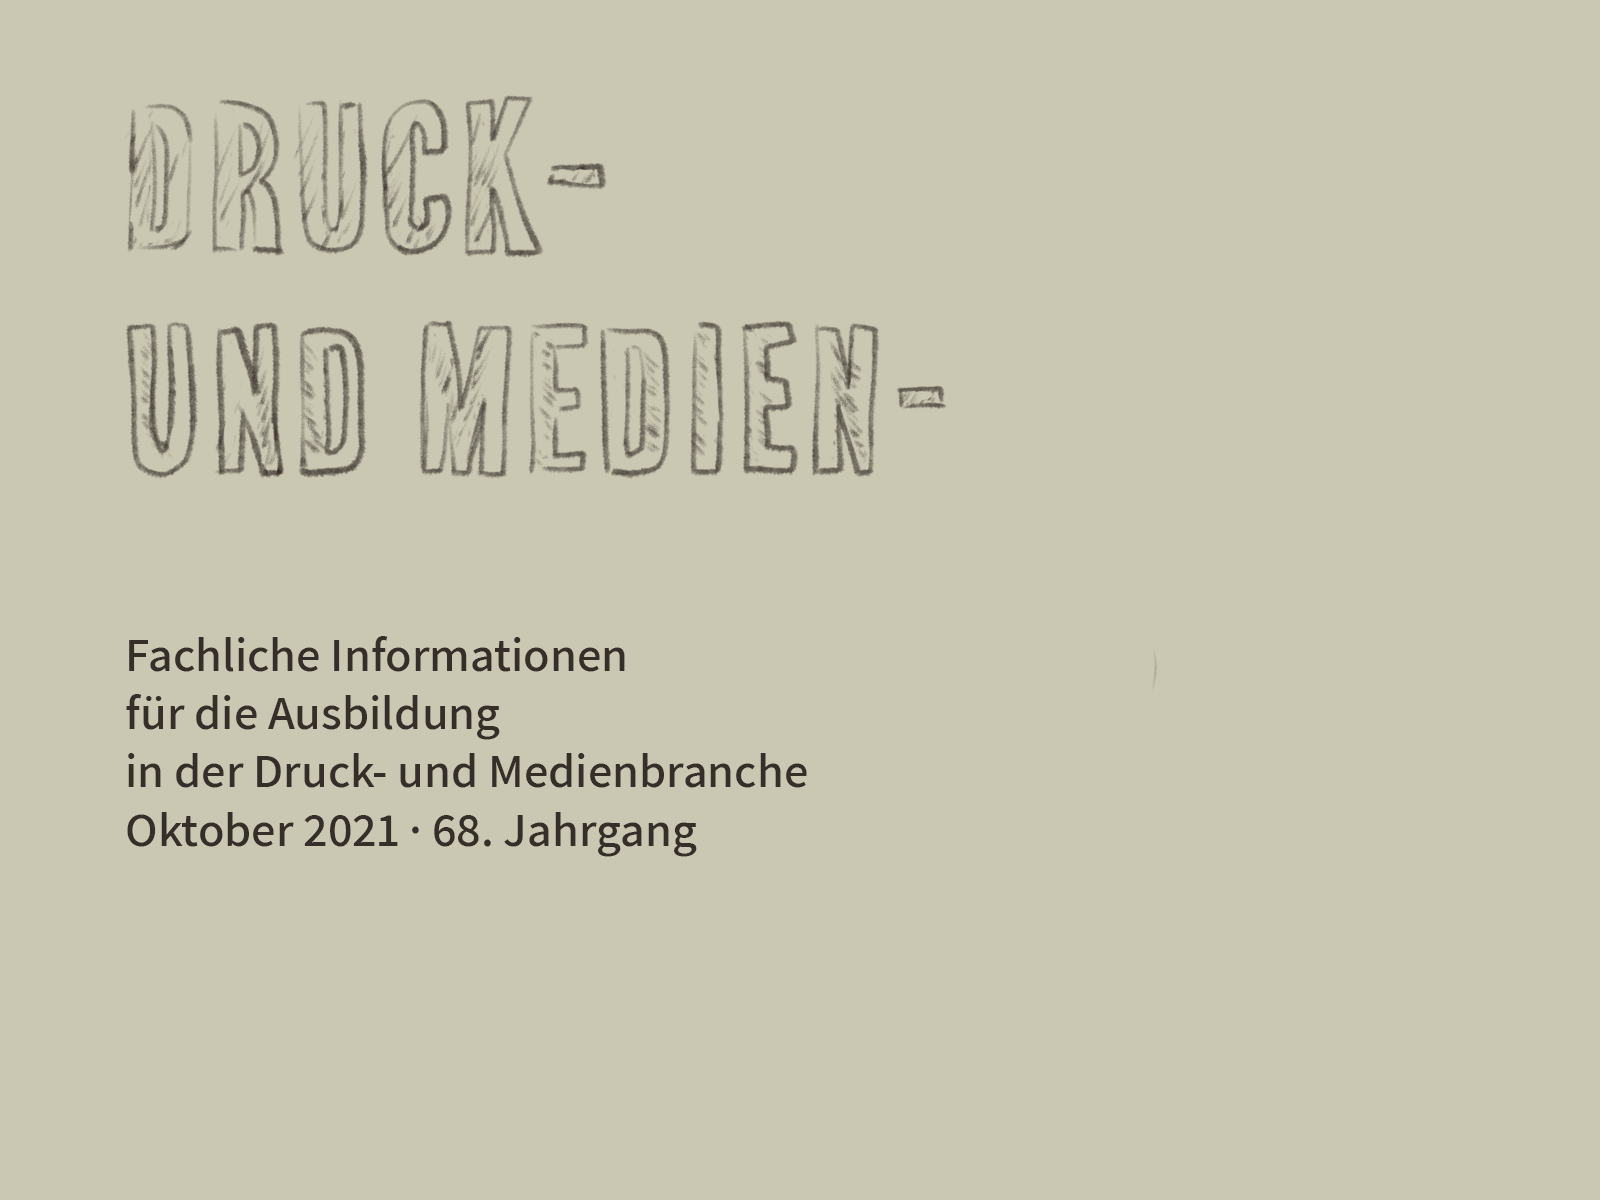 Title Competition Druck- und Medien-Abc – loreatus